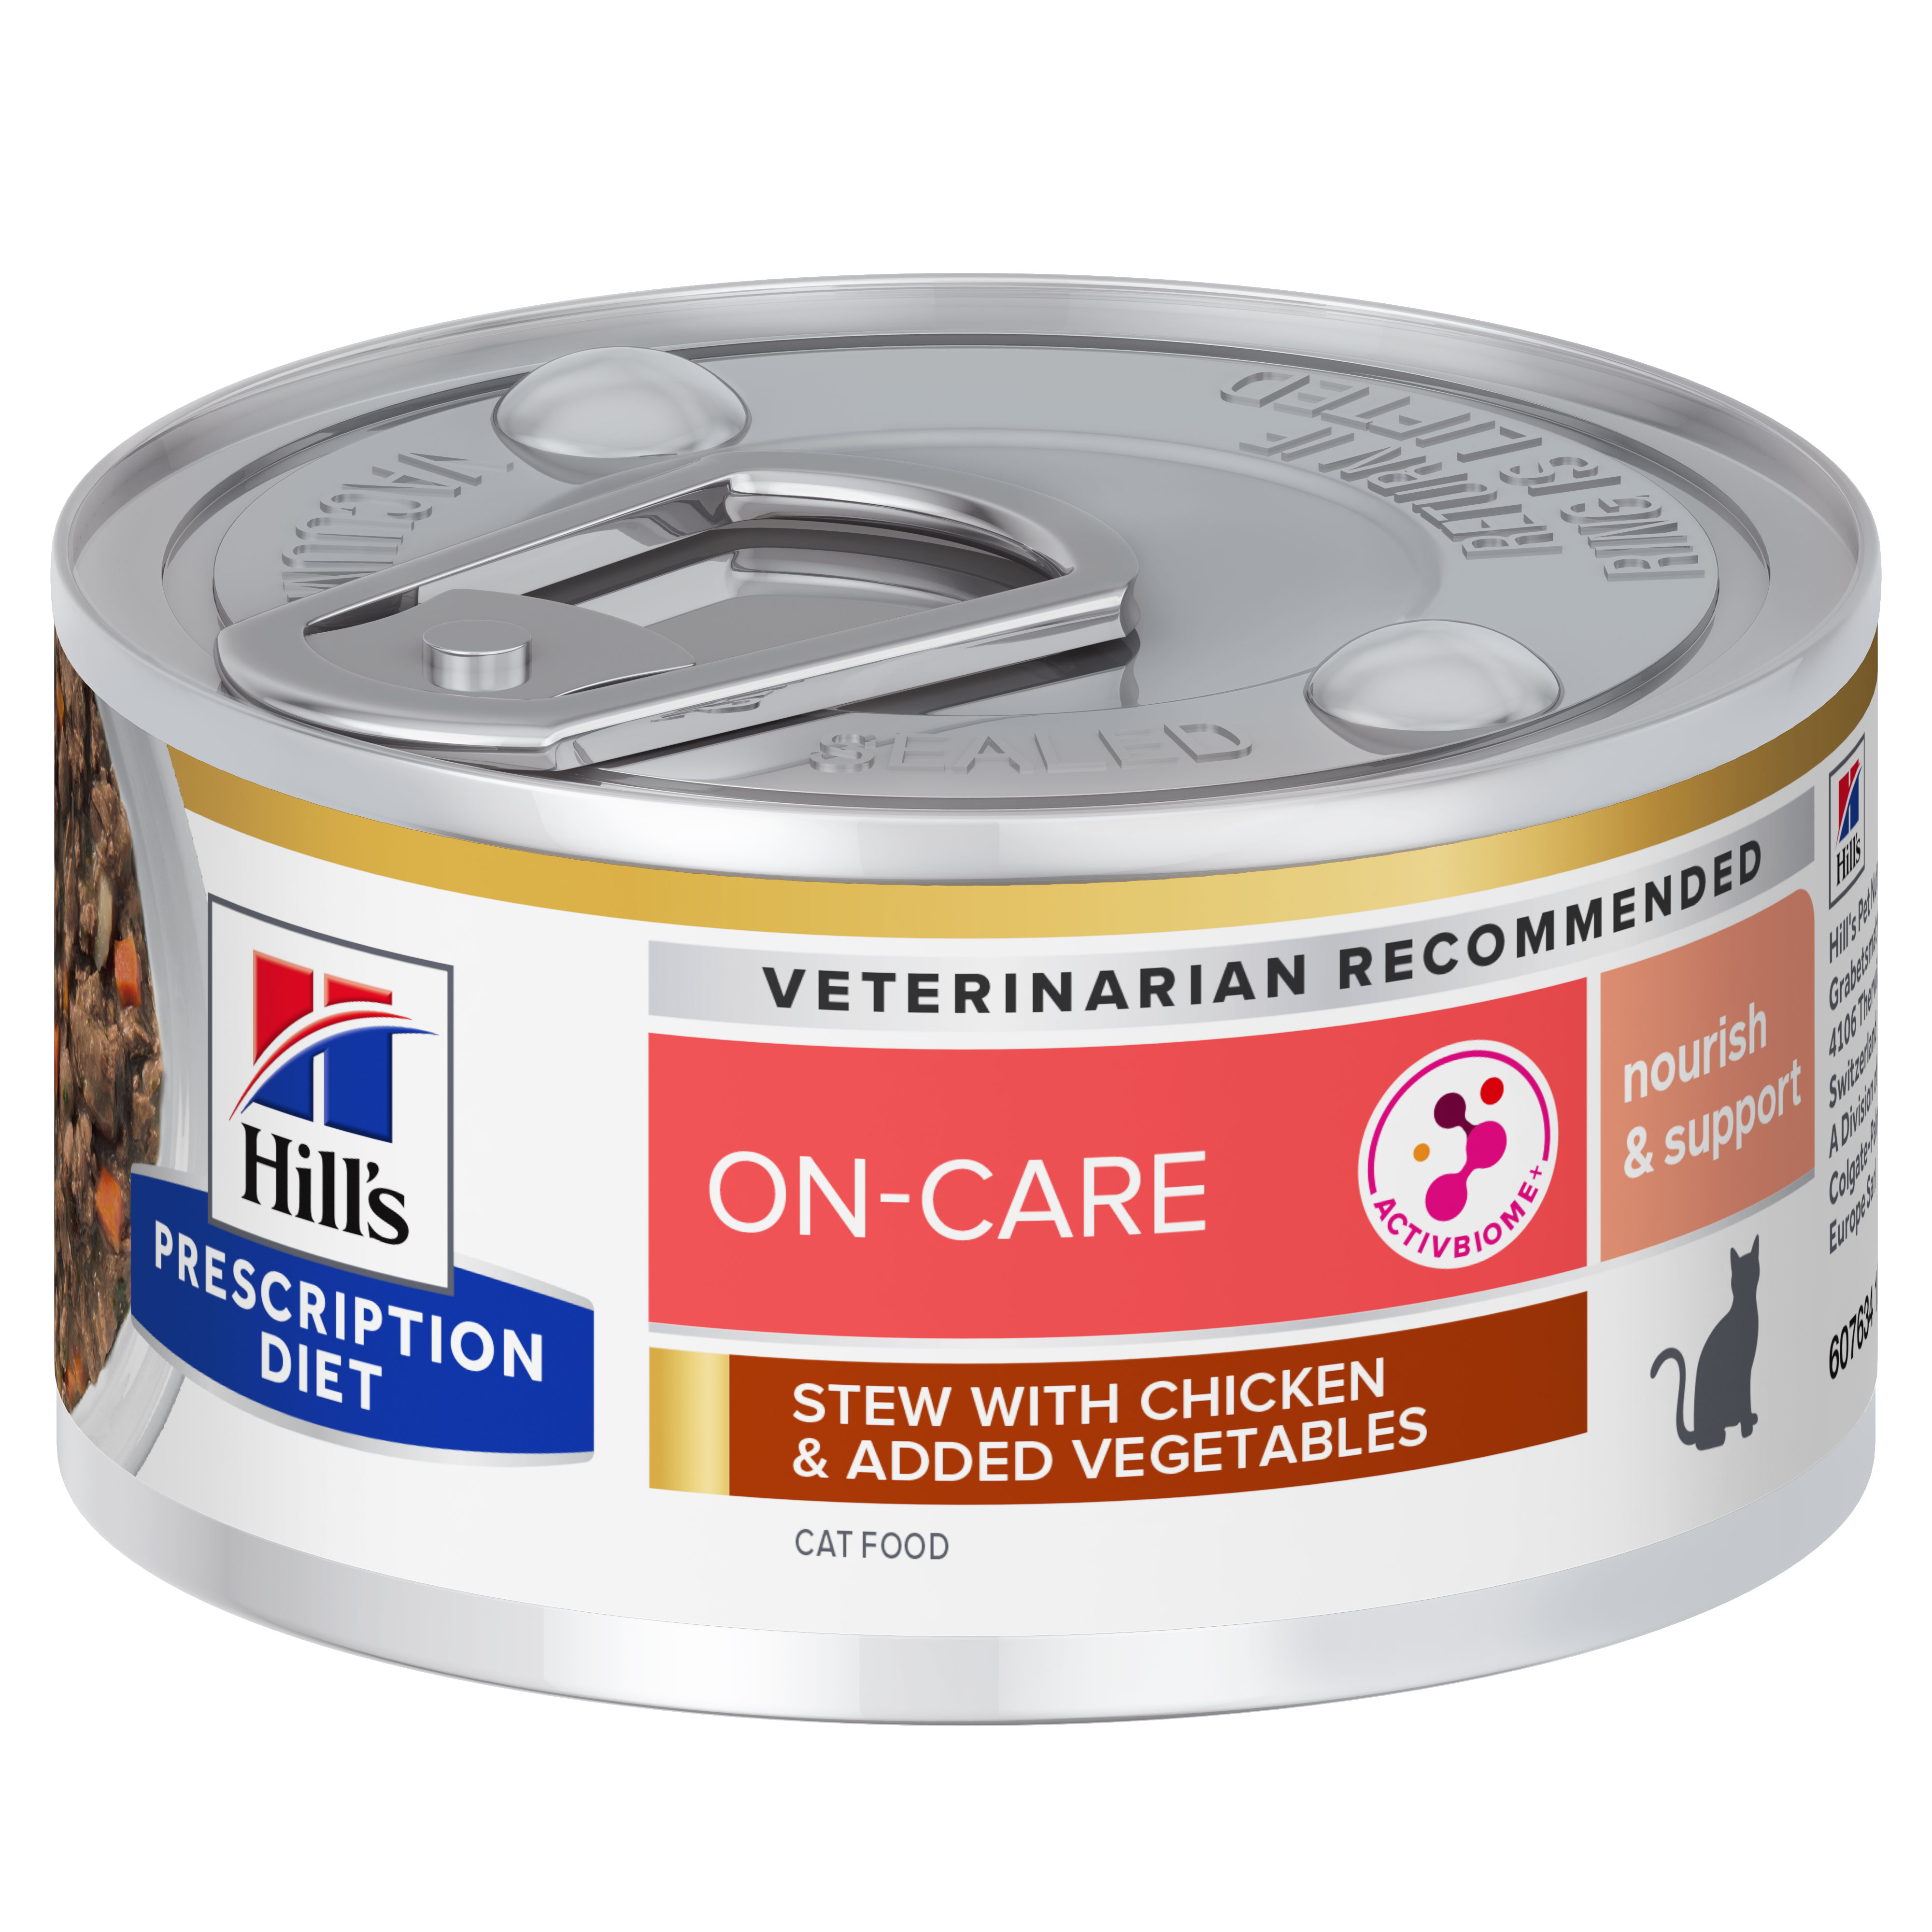 On-Care| Hill's Prescription Diet תמיכה בסרטן לחתול, נזיד 82 גרם (עם עוף וירקות)